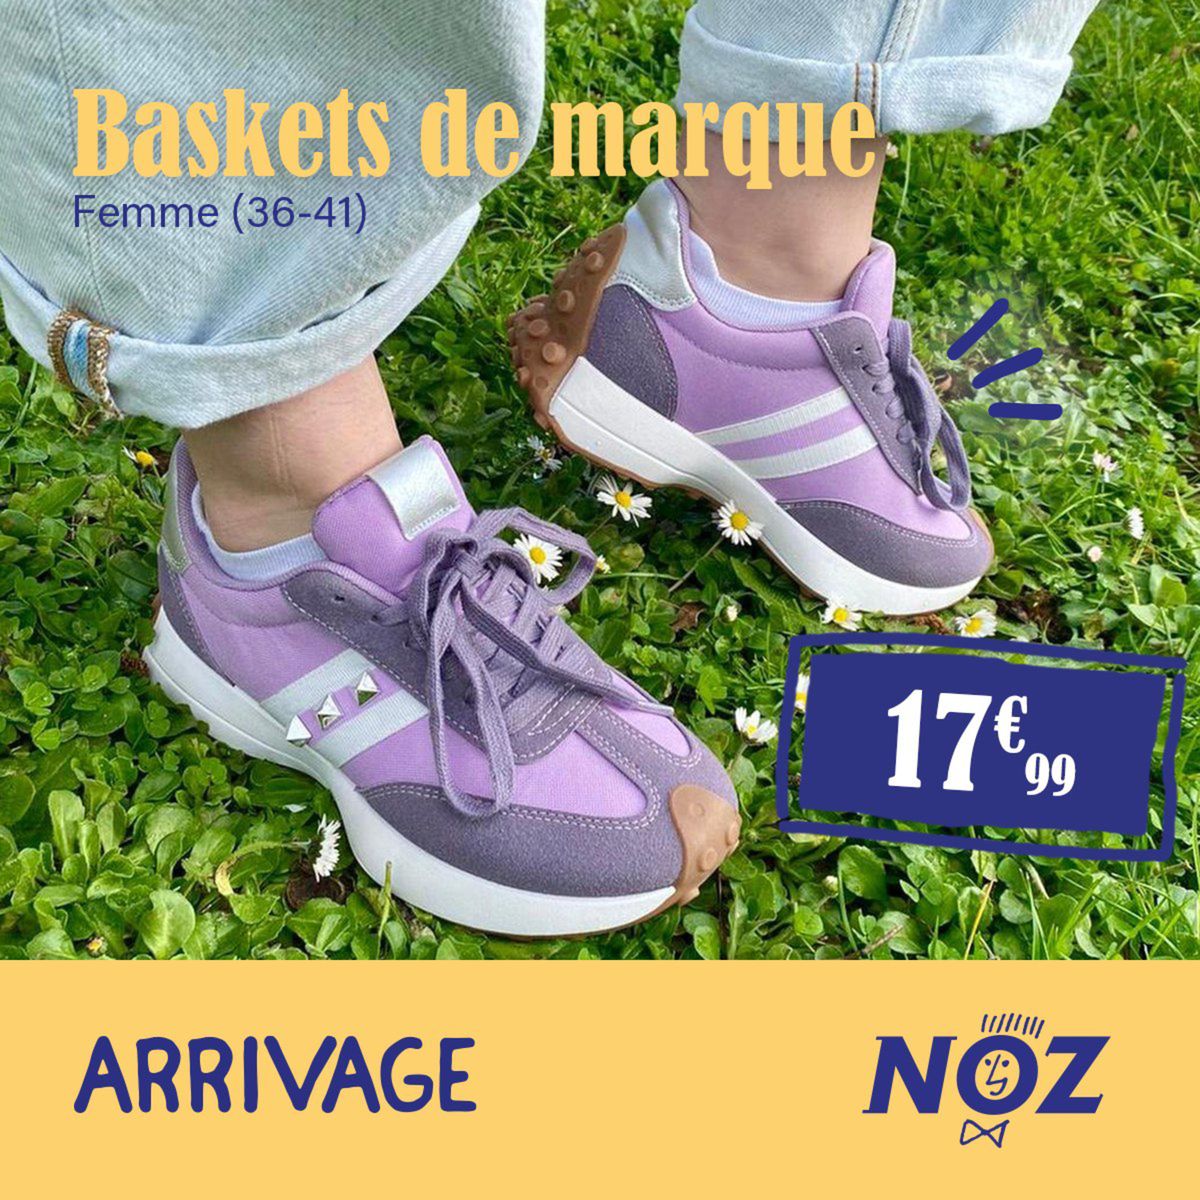 Catalogue Baskets femme & homme, page 00002